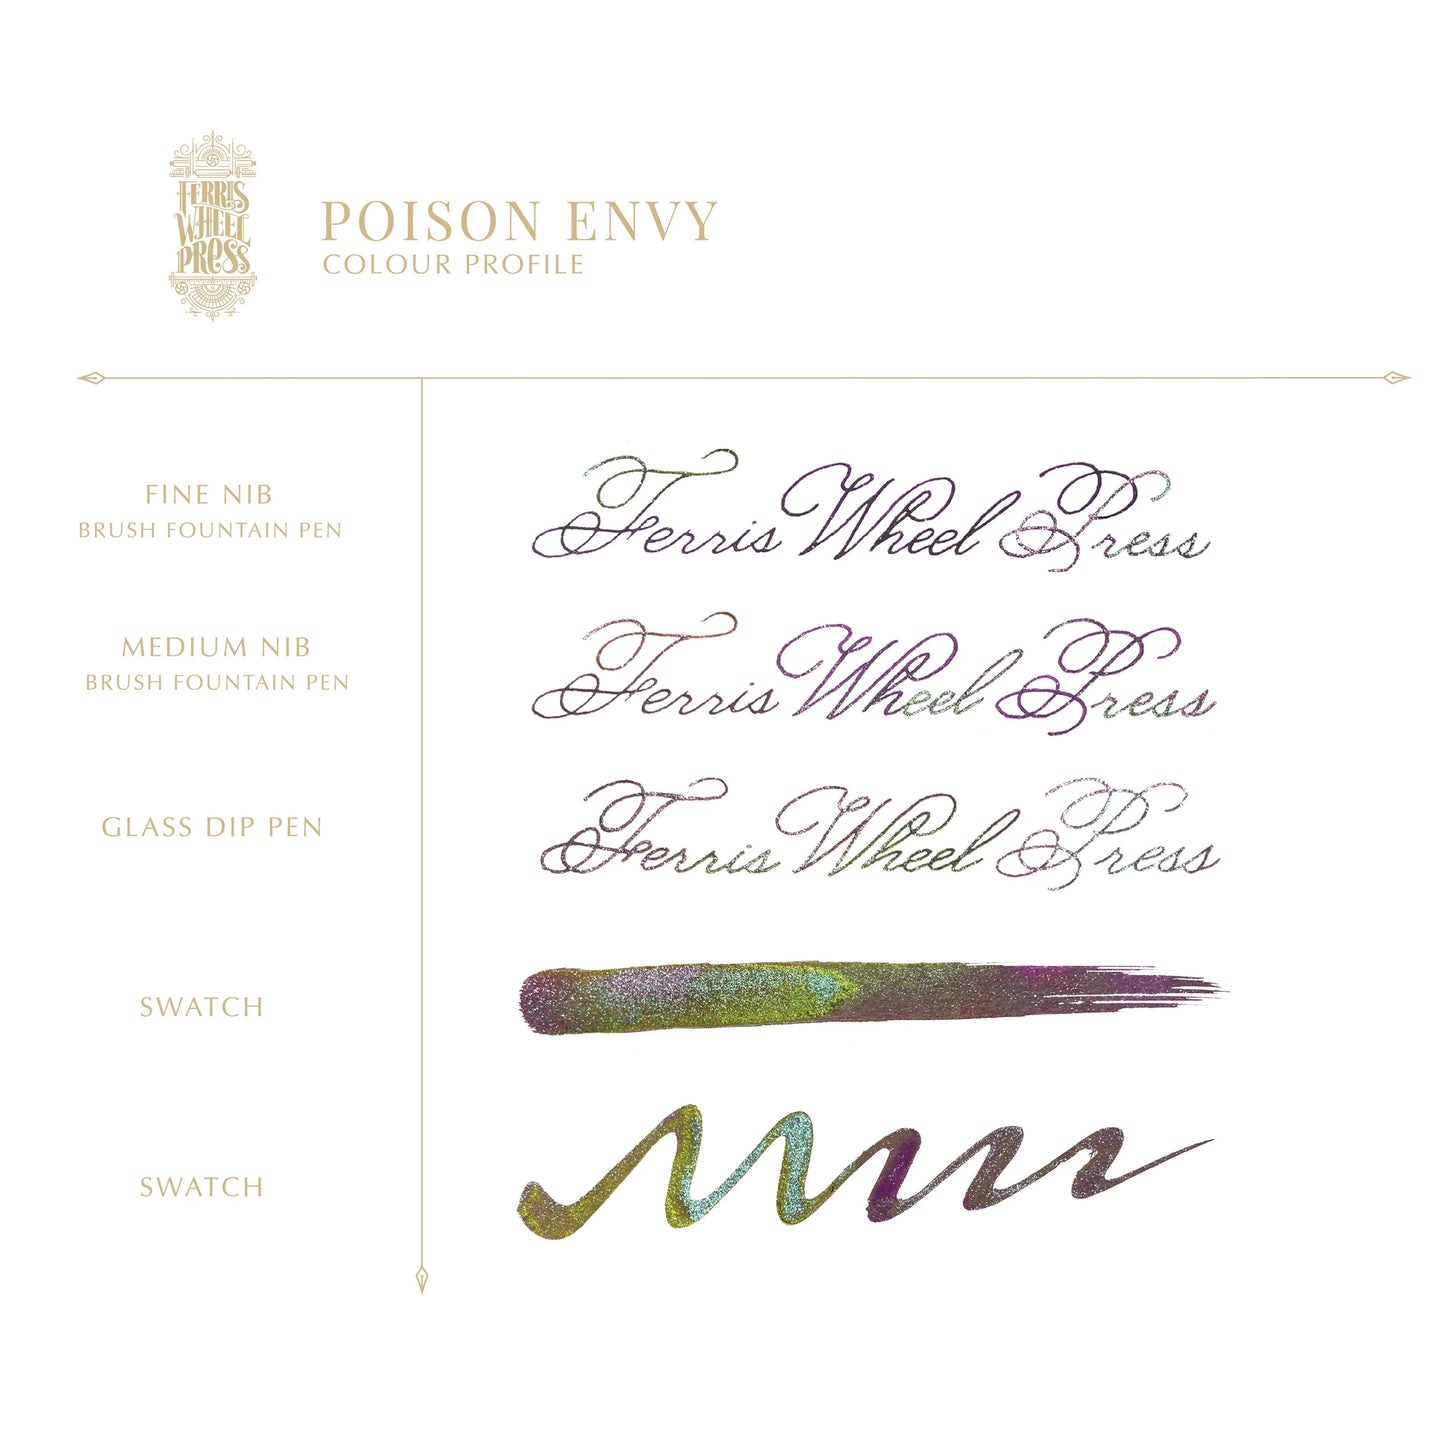 Ferris Wheel Press - Poison Envy Limited Edition - The Carousel Fountain Pen